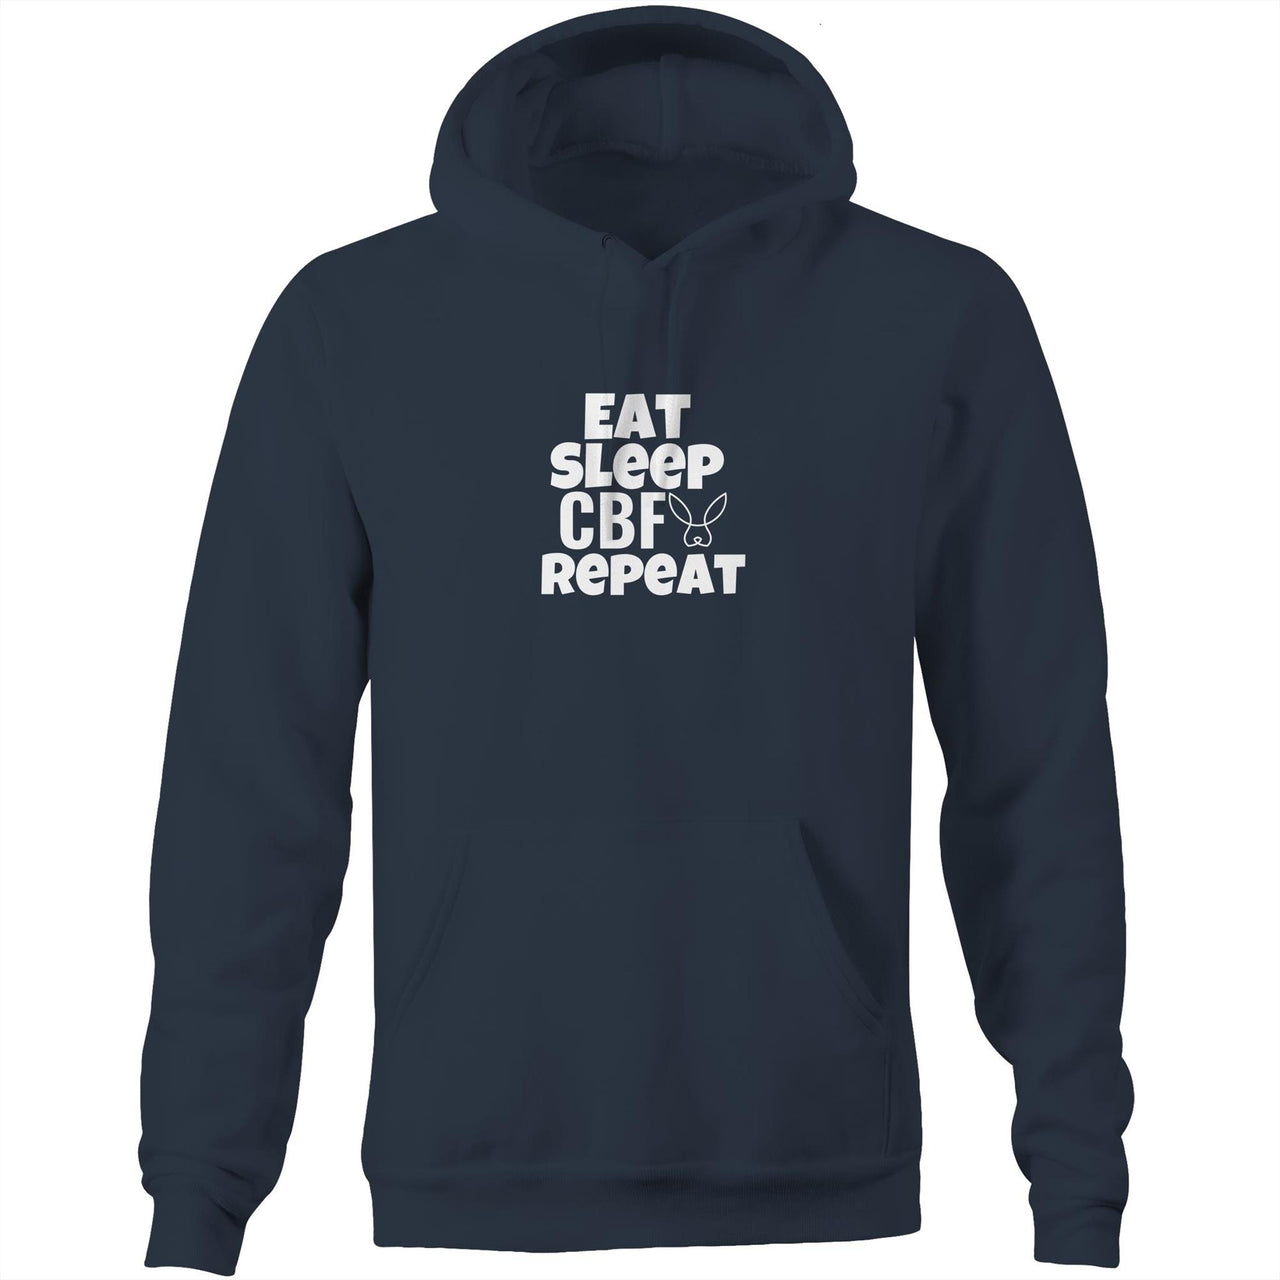 Eat Sleep CBF Repeat Pocket Hoodie Sweatshirt Navy by CBF Clothing